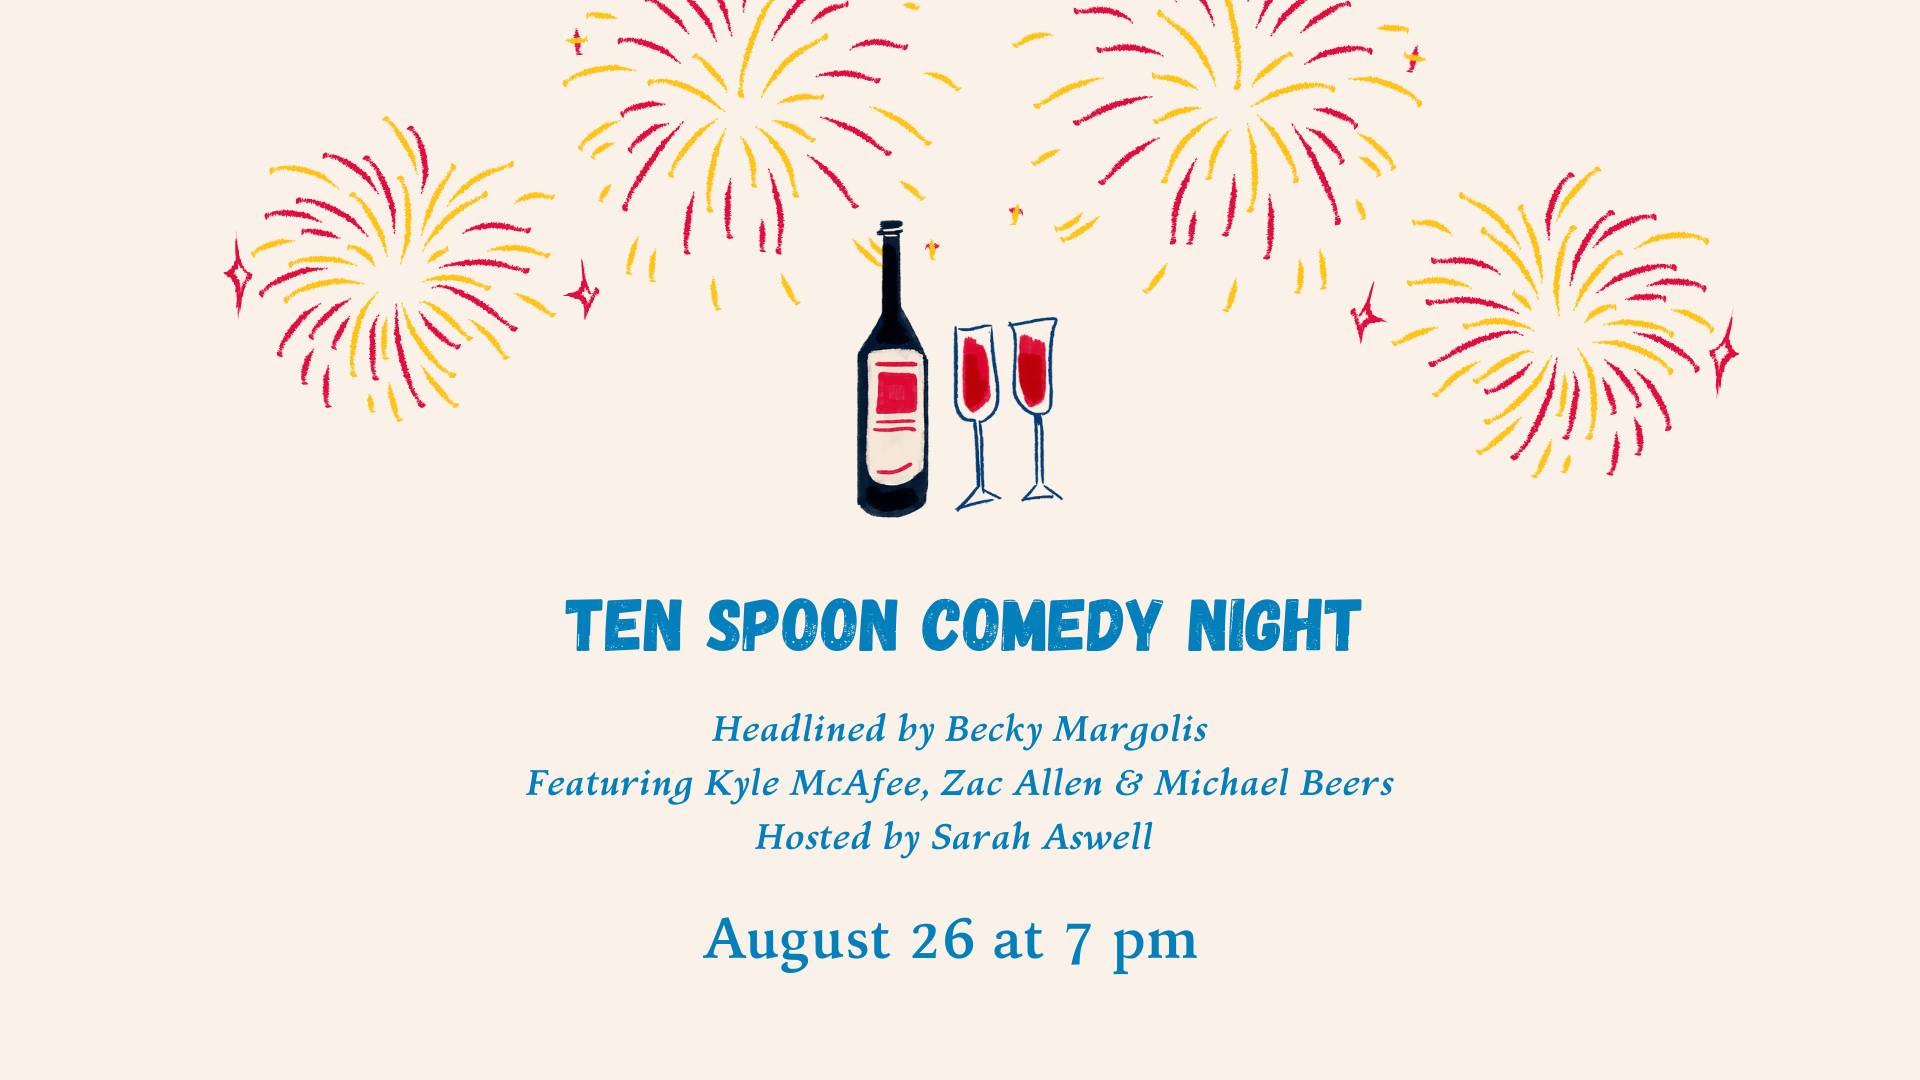 Revival Comedy Night At Ten Spoon